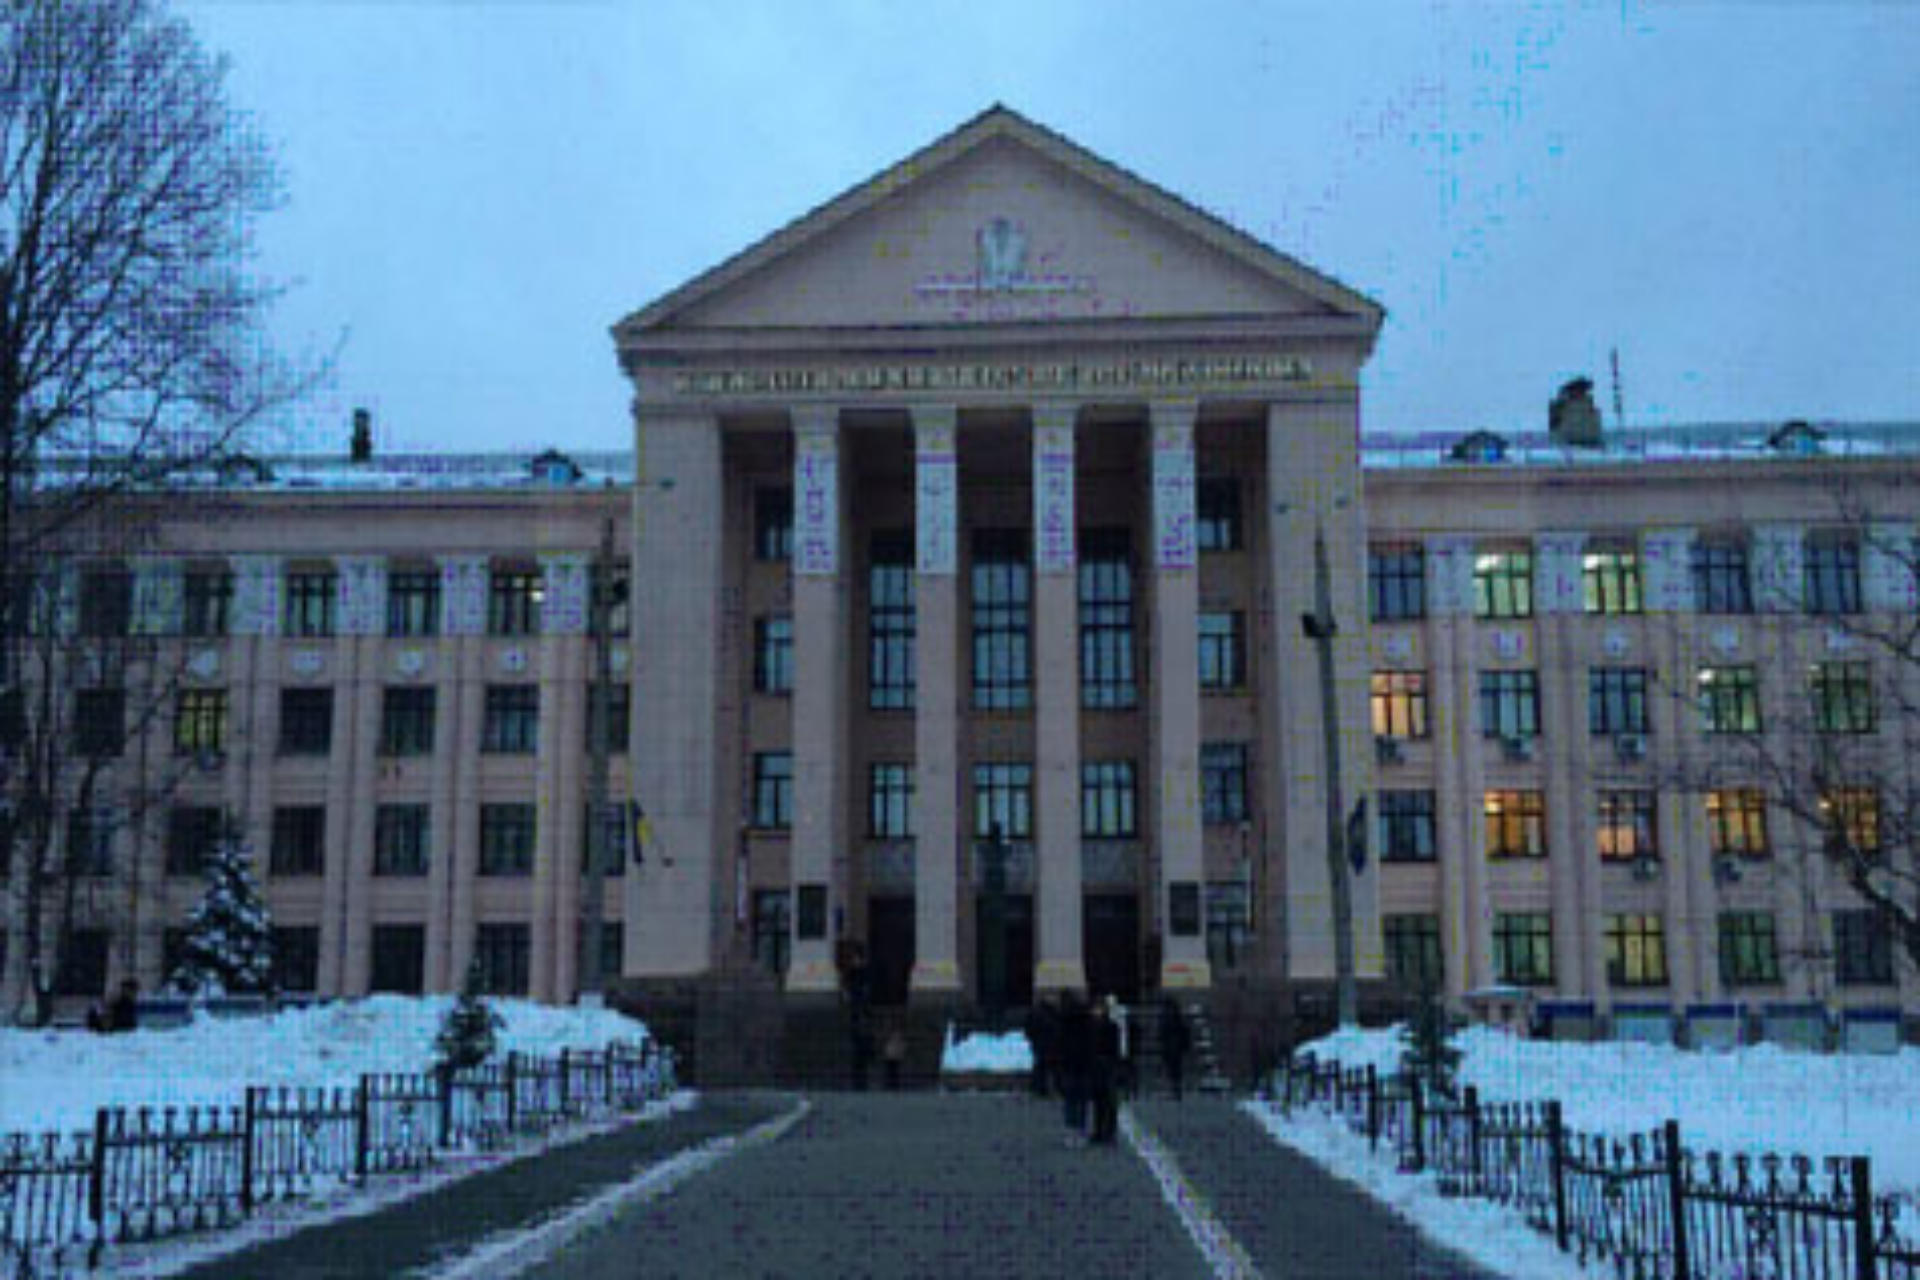 Study palace hub (MBBS in Ukraine)(Kyiv Medical University)